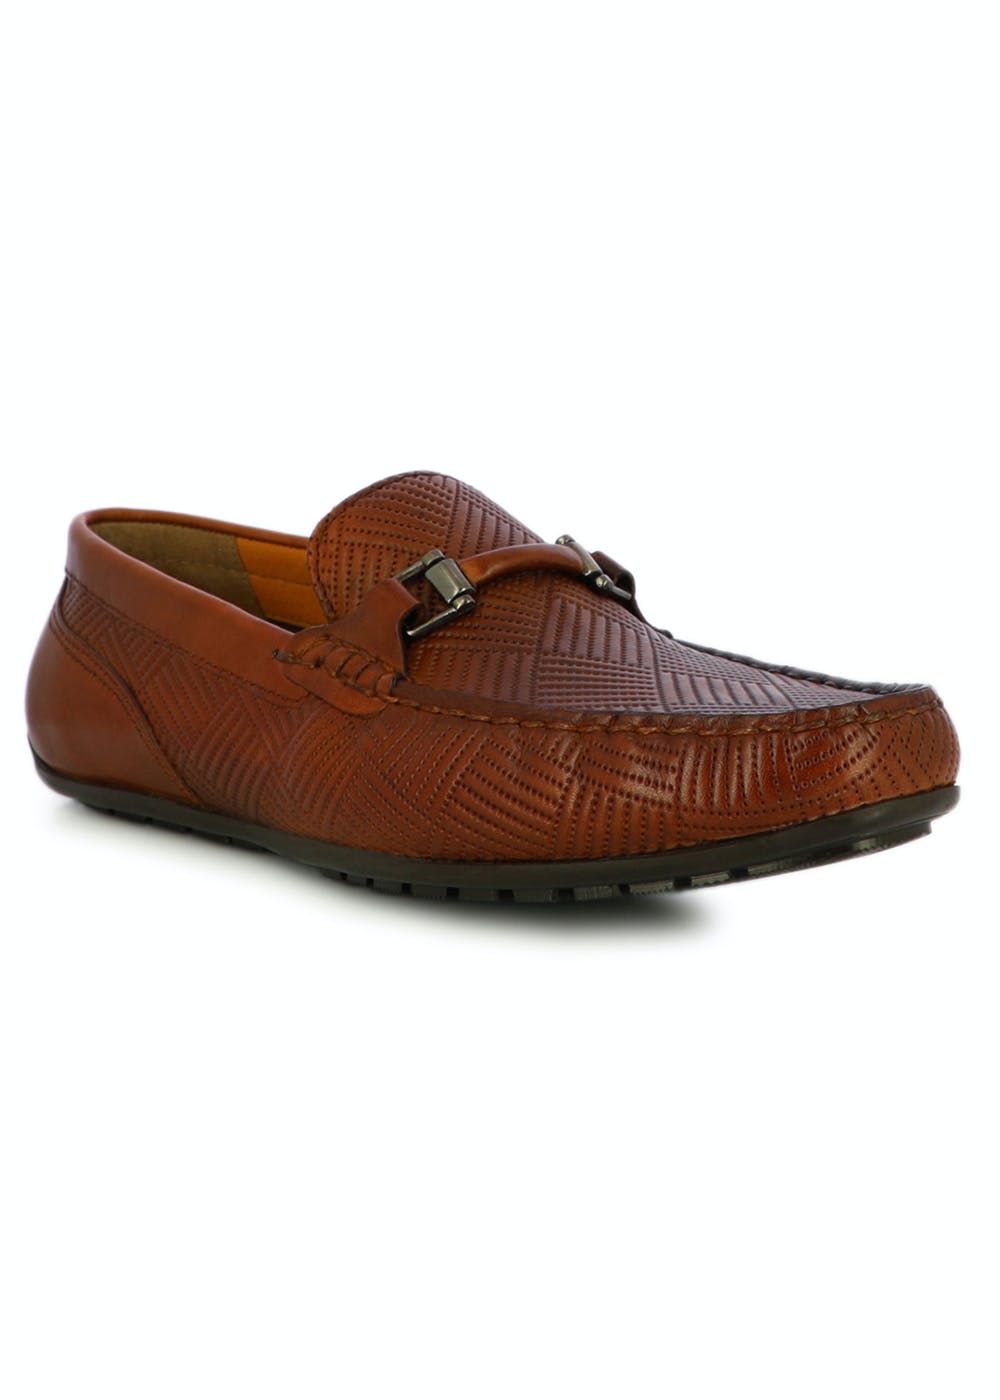 Get Travis Cognac Formal Loafers at ₹ 2698 | LBB Shop